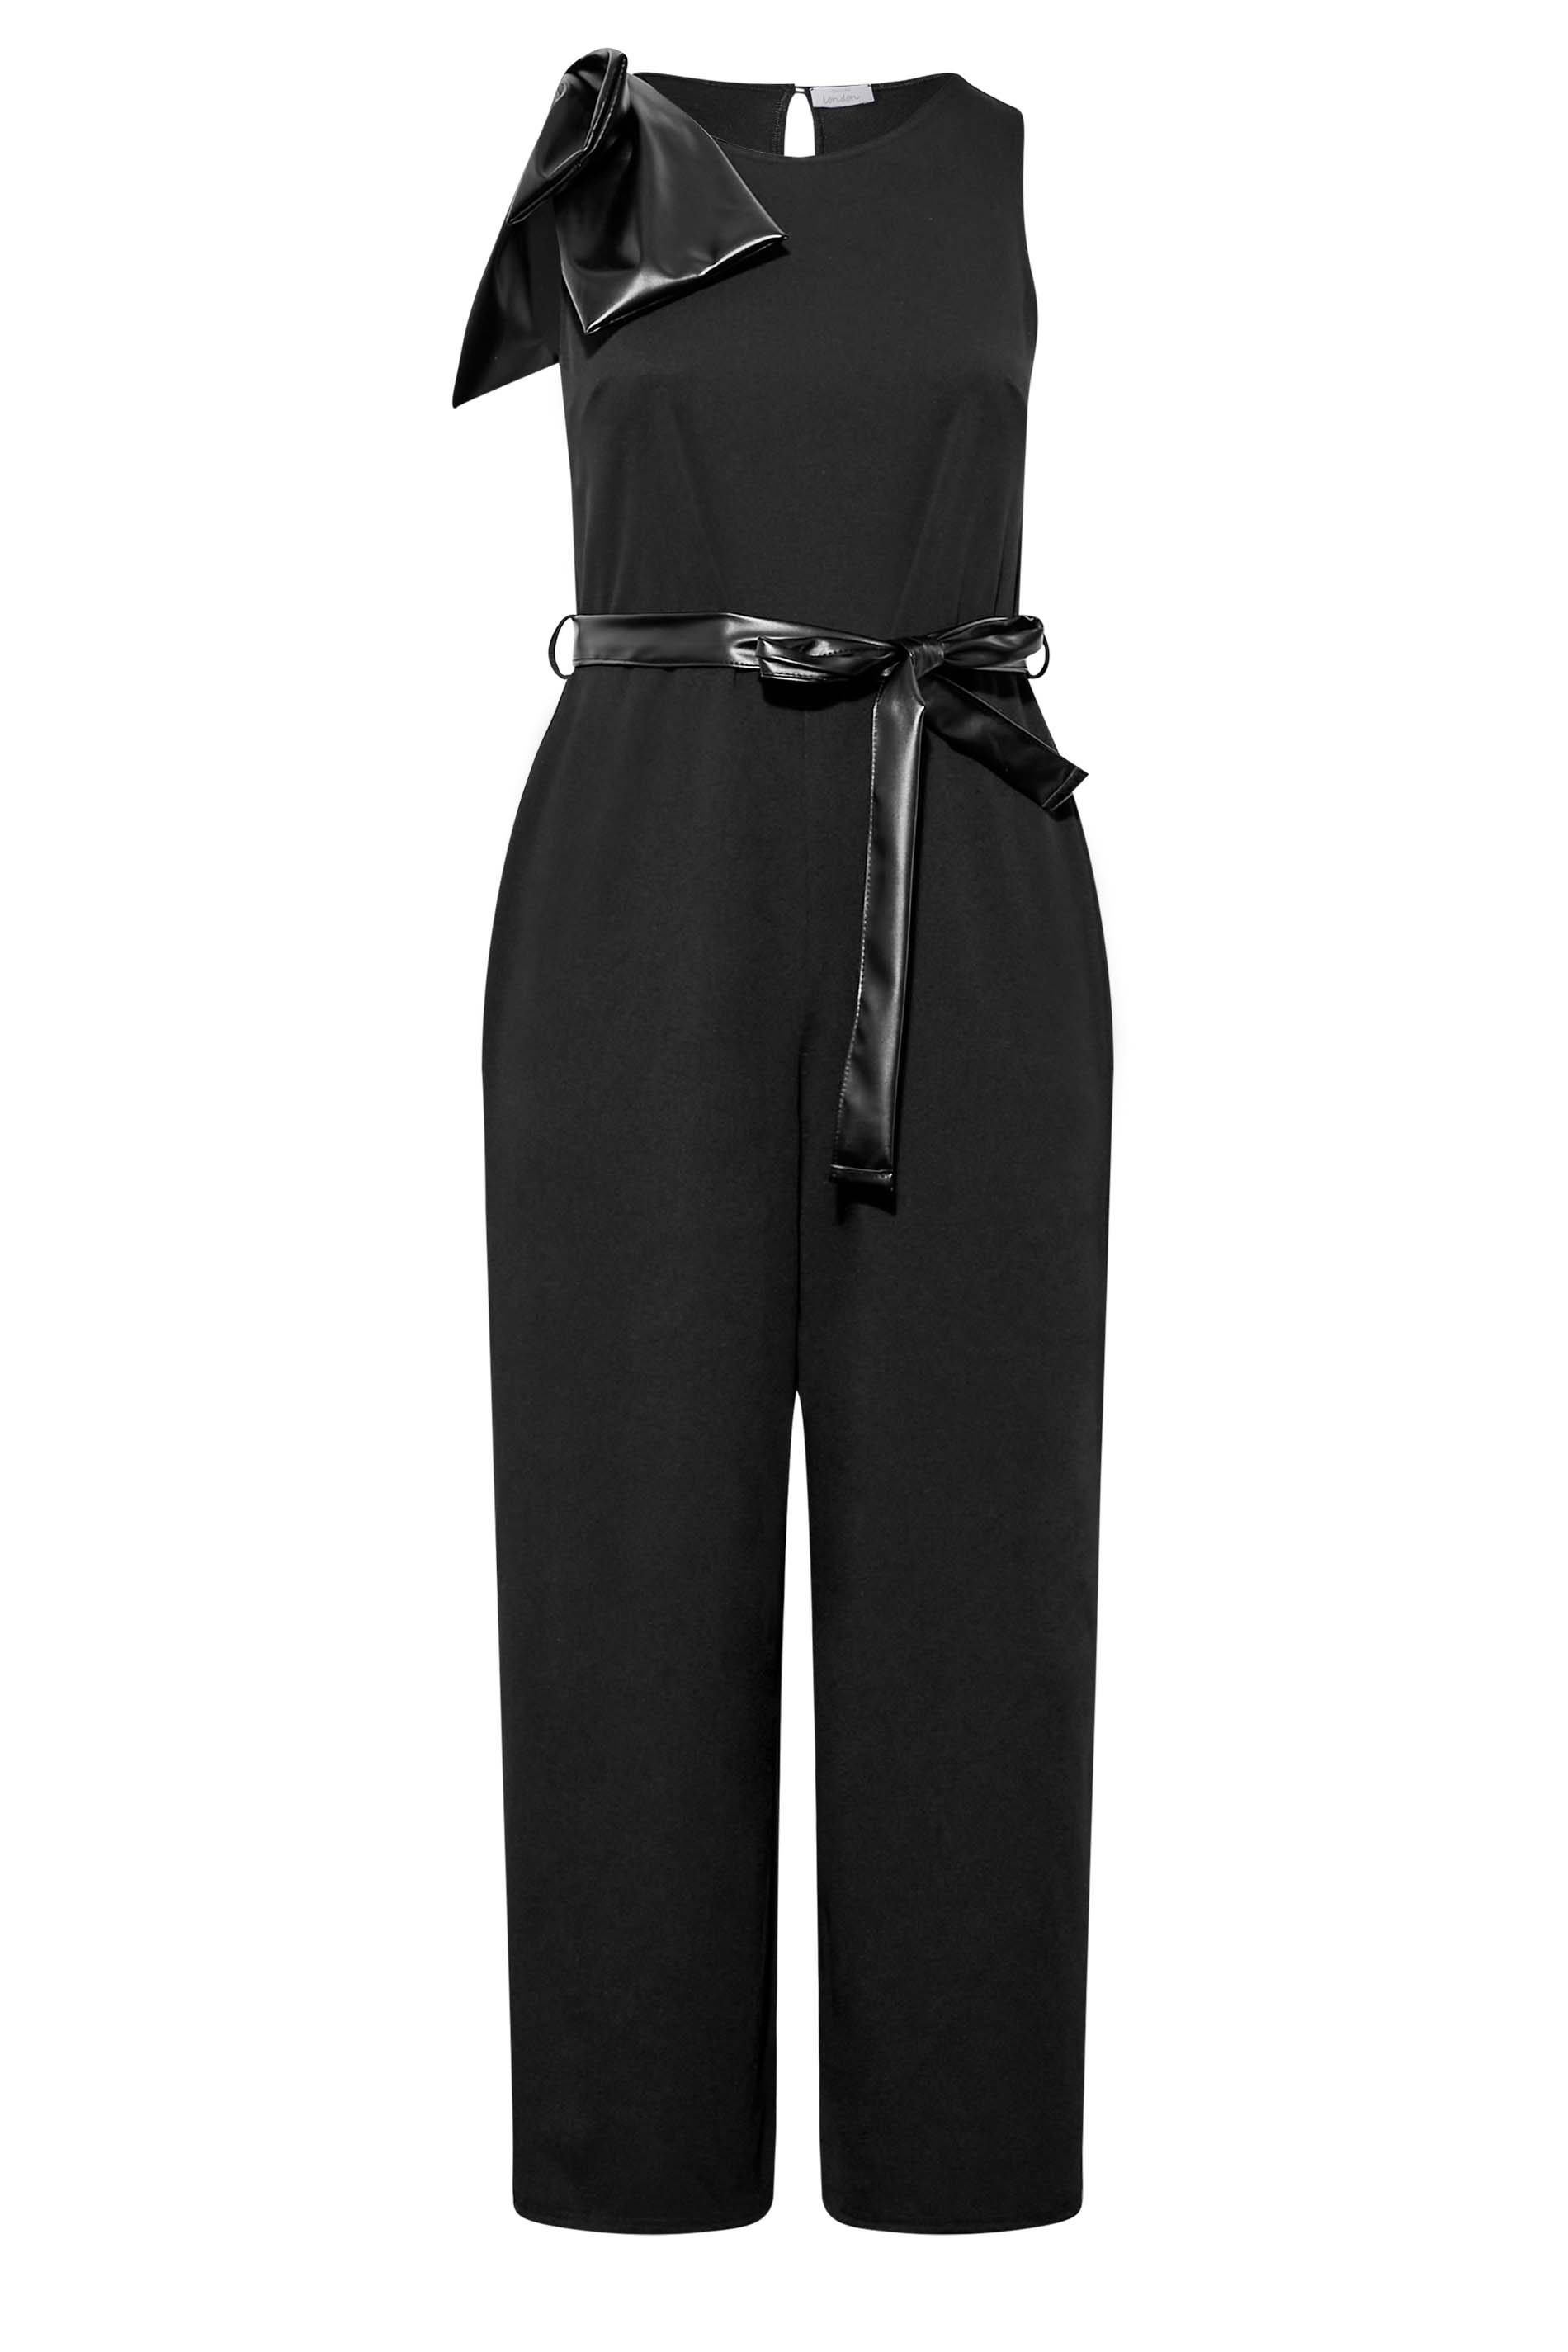 YOURS LONDON Curve Black Leather Look Bow Shoulder Jumpsuit | Yours ...